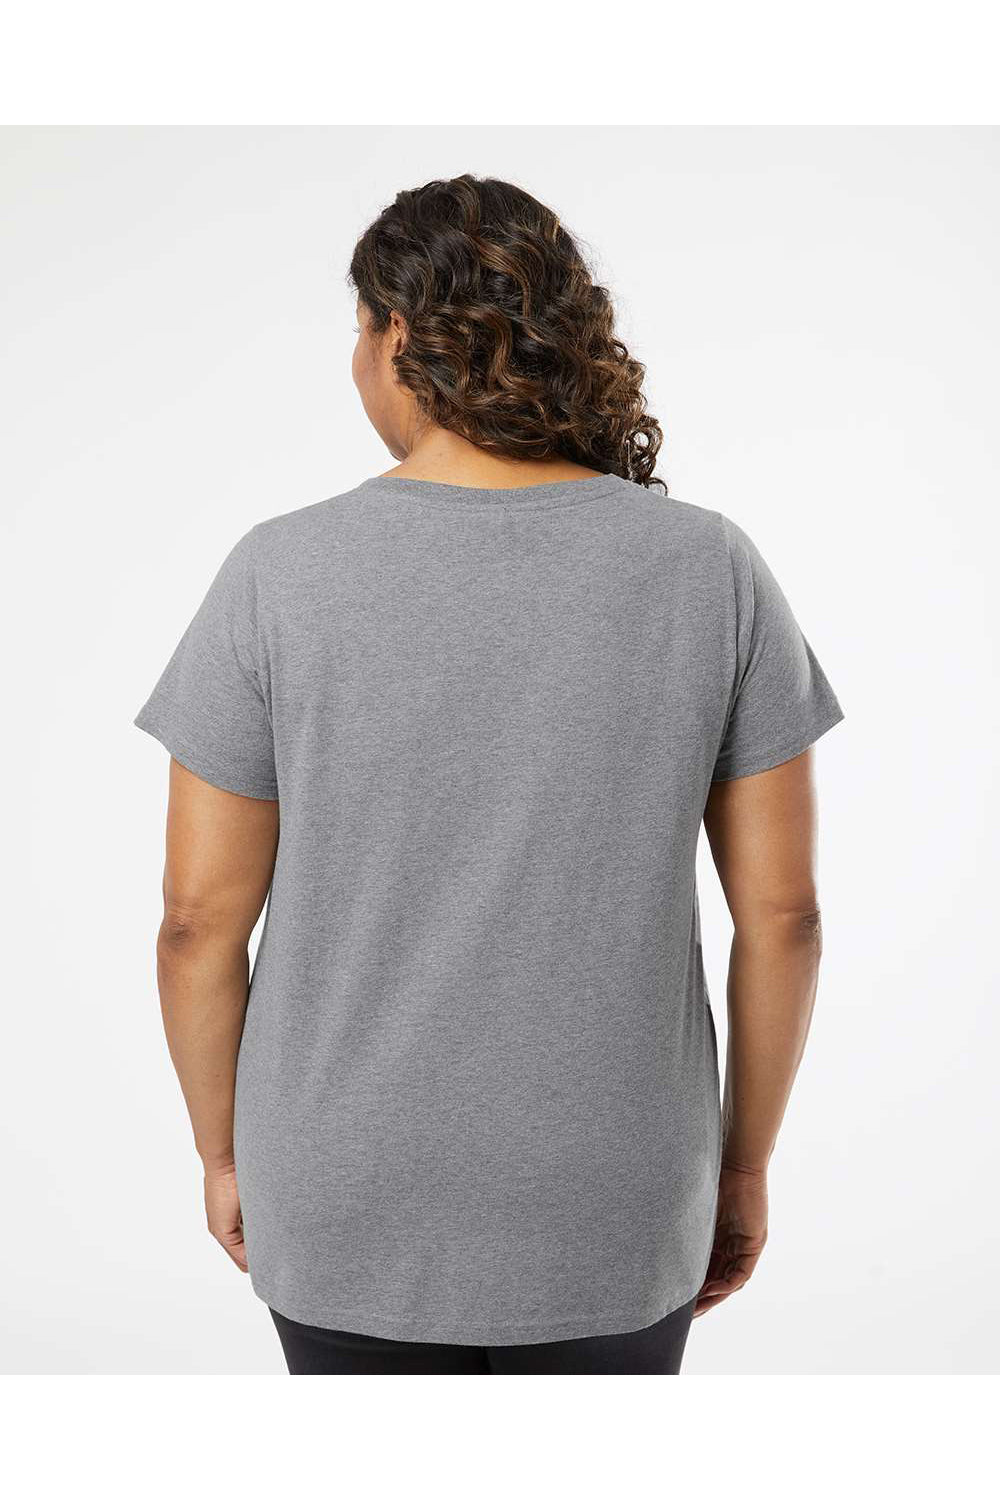 LAT 3817 Womens Curvy Collection Fine Jersey Short Sleeve V-Neck T-Shirt Heather Granite Grey Model Back